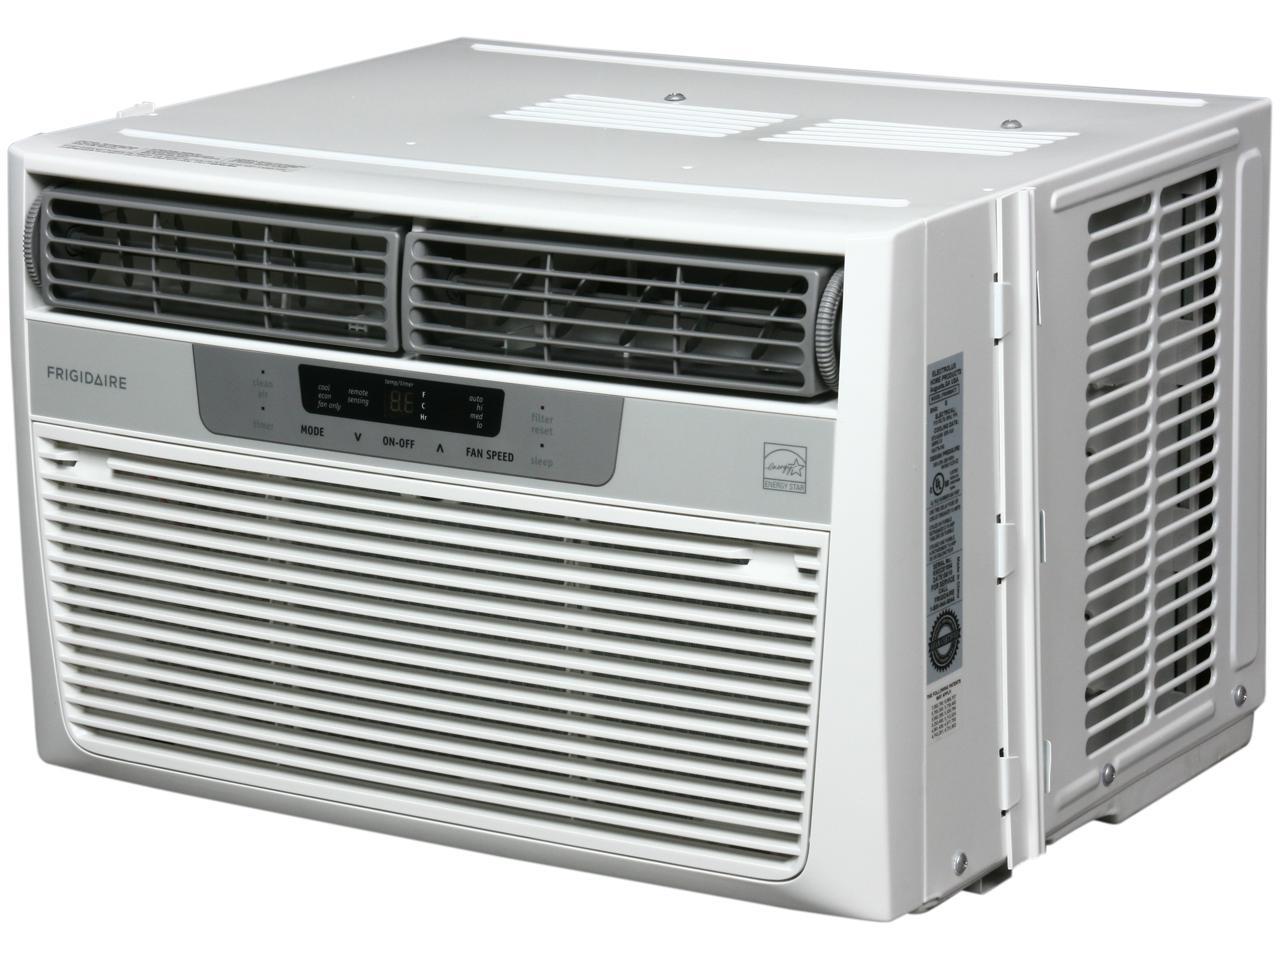 Frigidaire Air Conditioner For Living Room